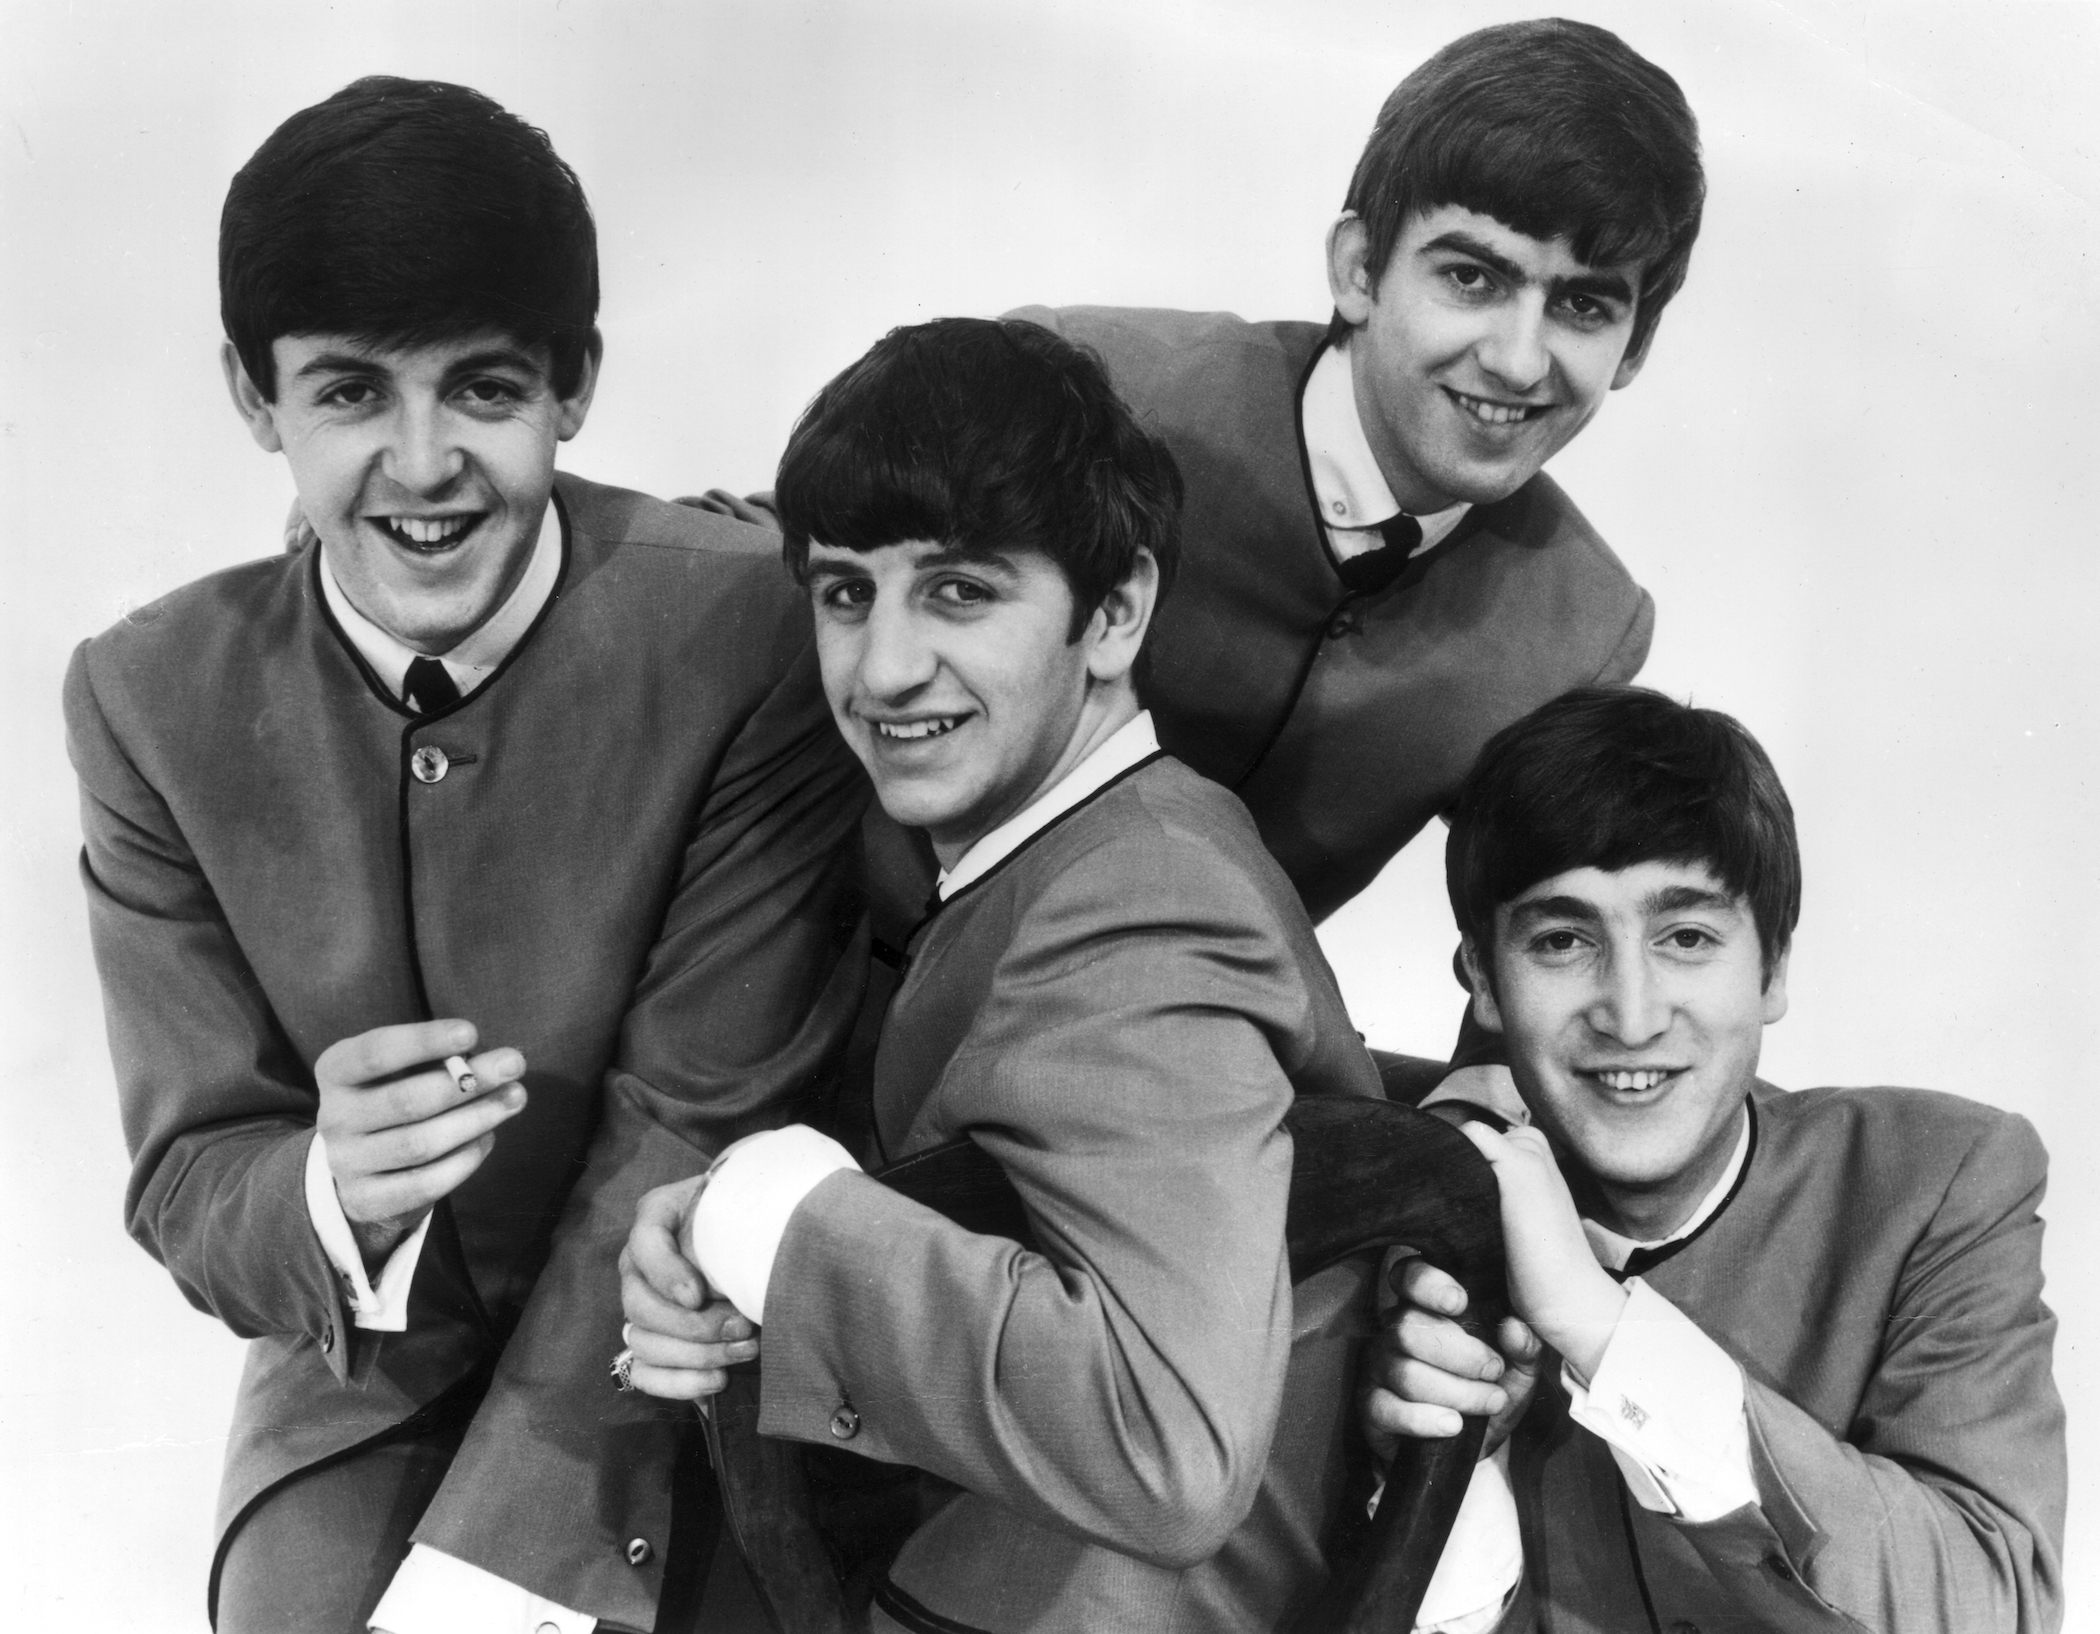 Promotional portrait of the British rock band The Beatles, circa 1963. Paul McCartney, Ringo Starr, George Harrison, and John Lennon